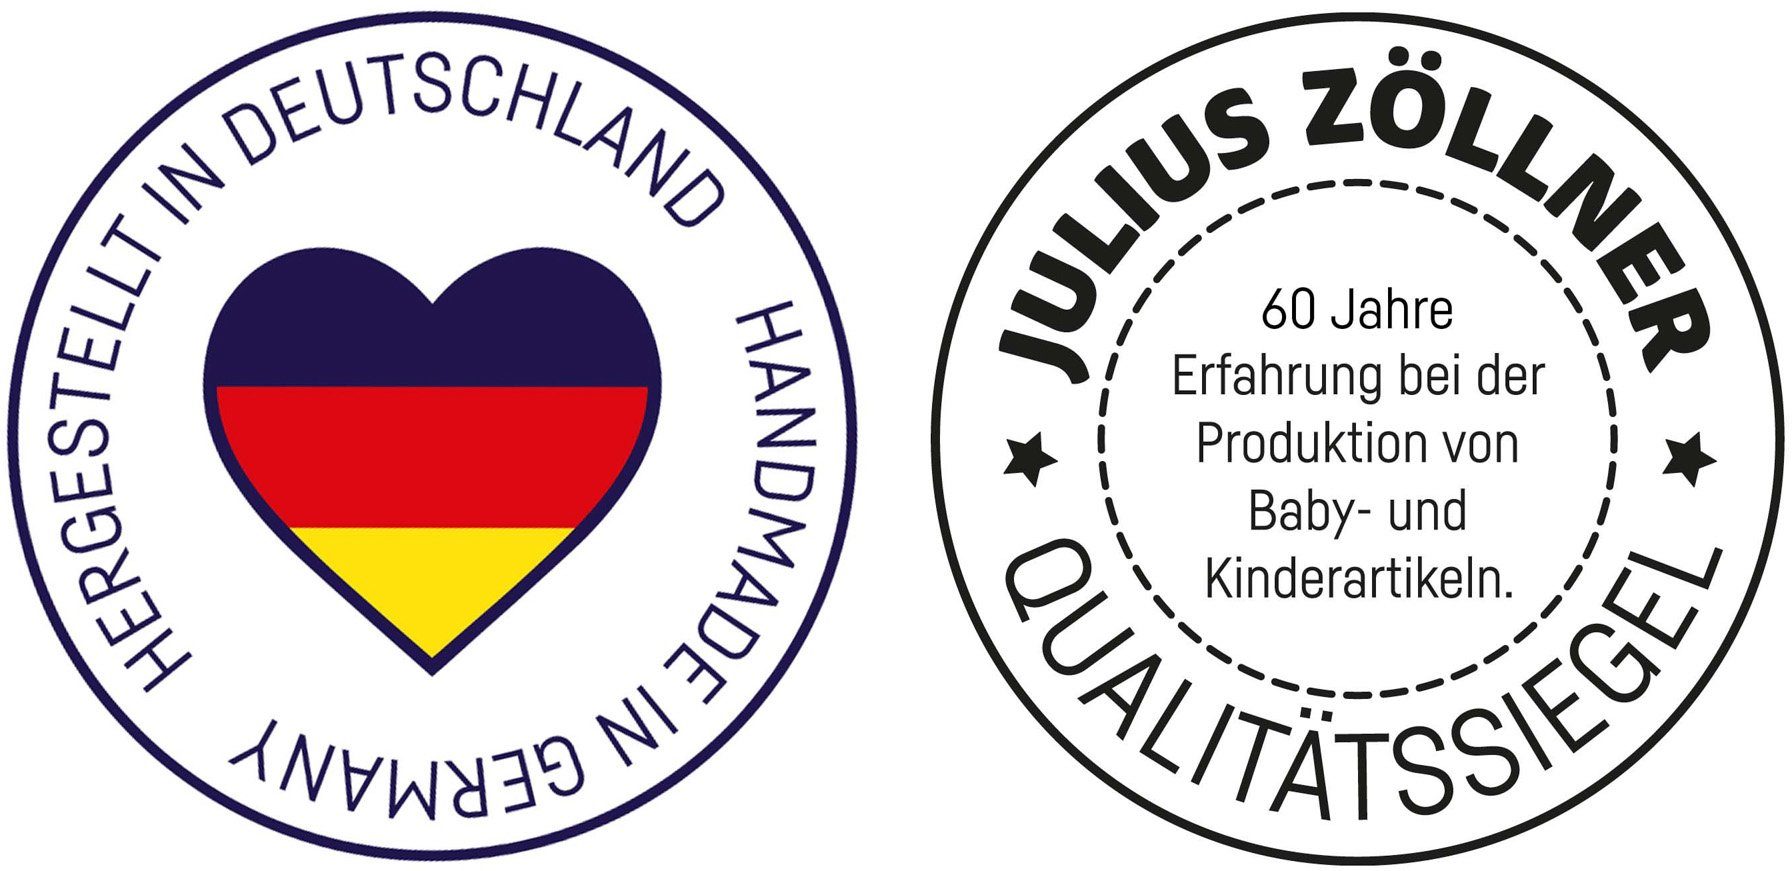 Krabbeldecke Organic, Bogen, Zöllner, Germany Made Julius in